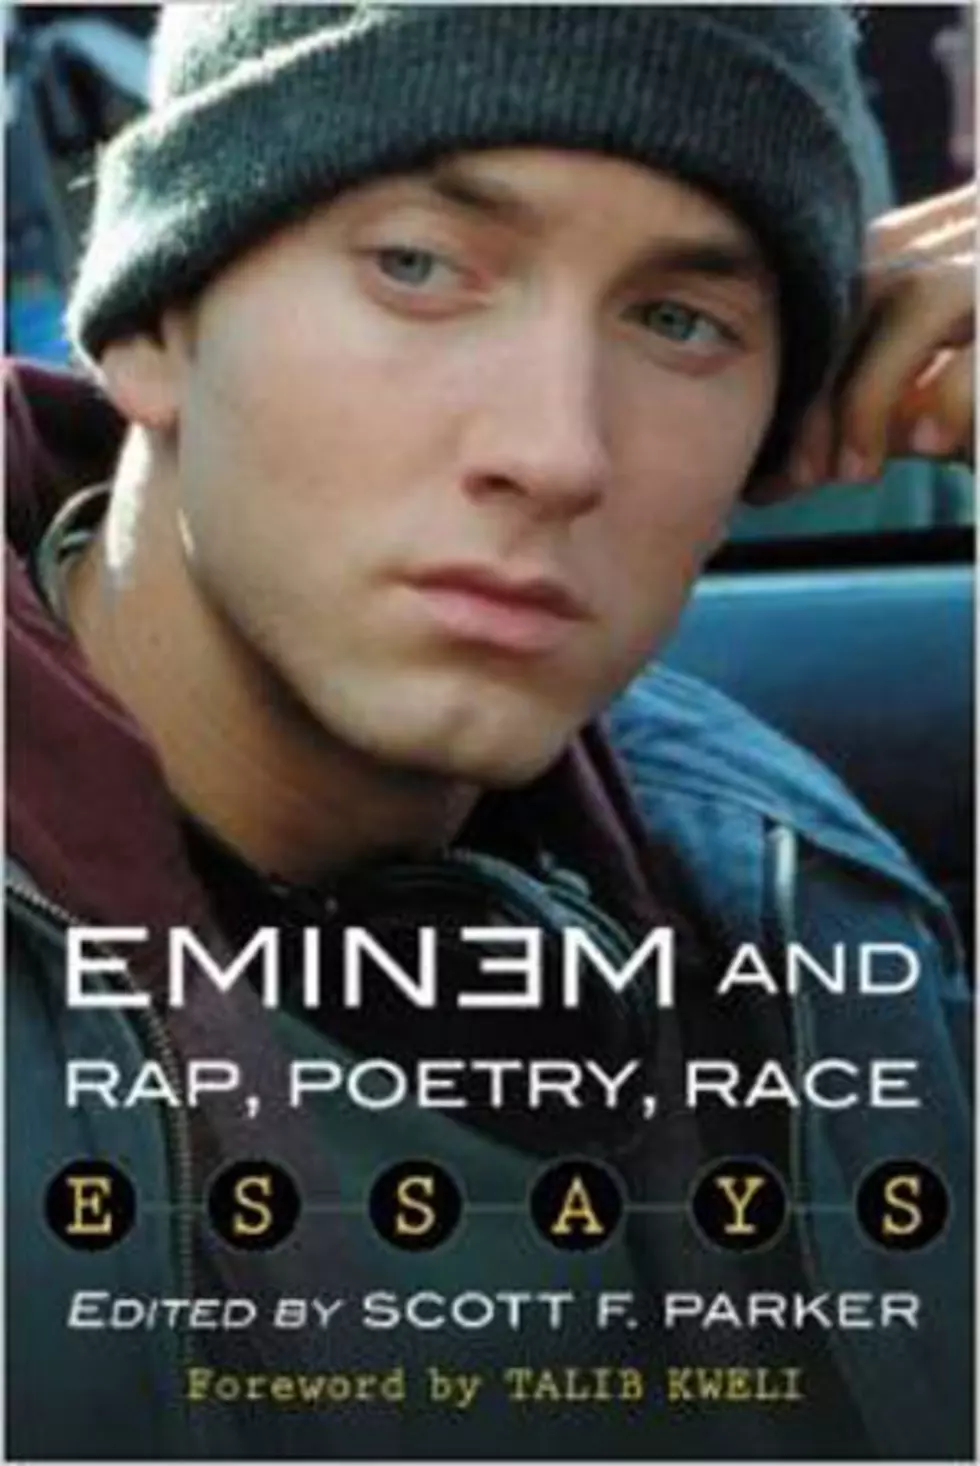 Eminem&#8217;s Career, Lyrics Examined in New &#8216;Essays&#8217; Book